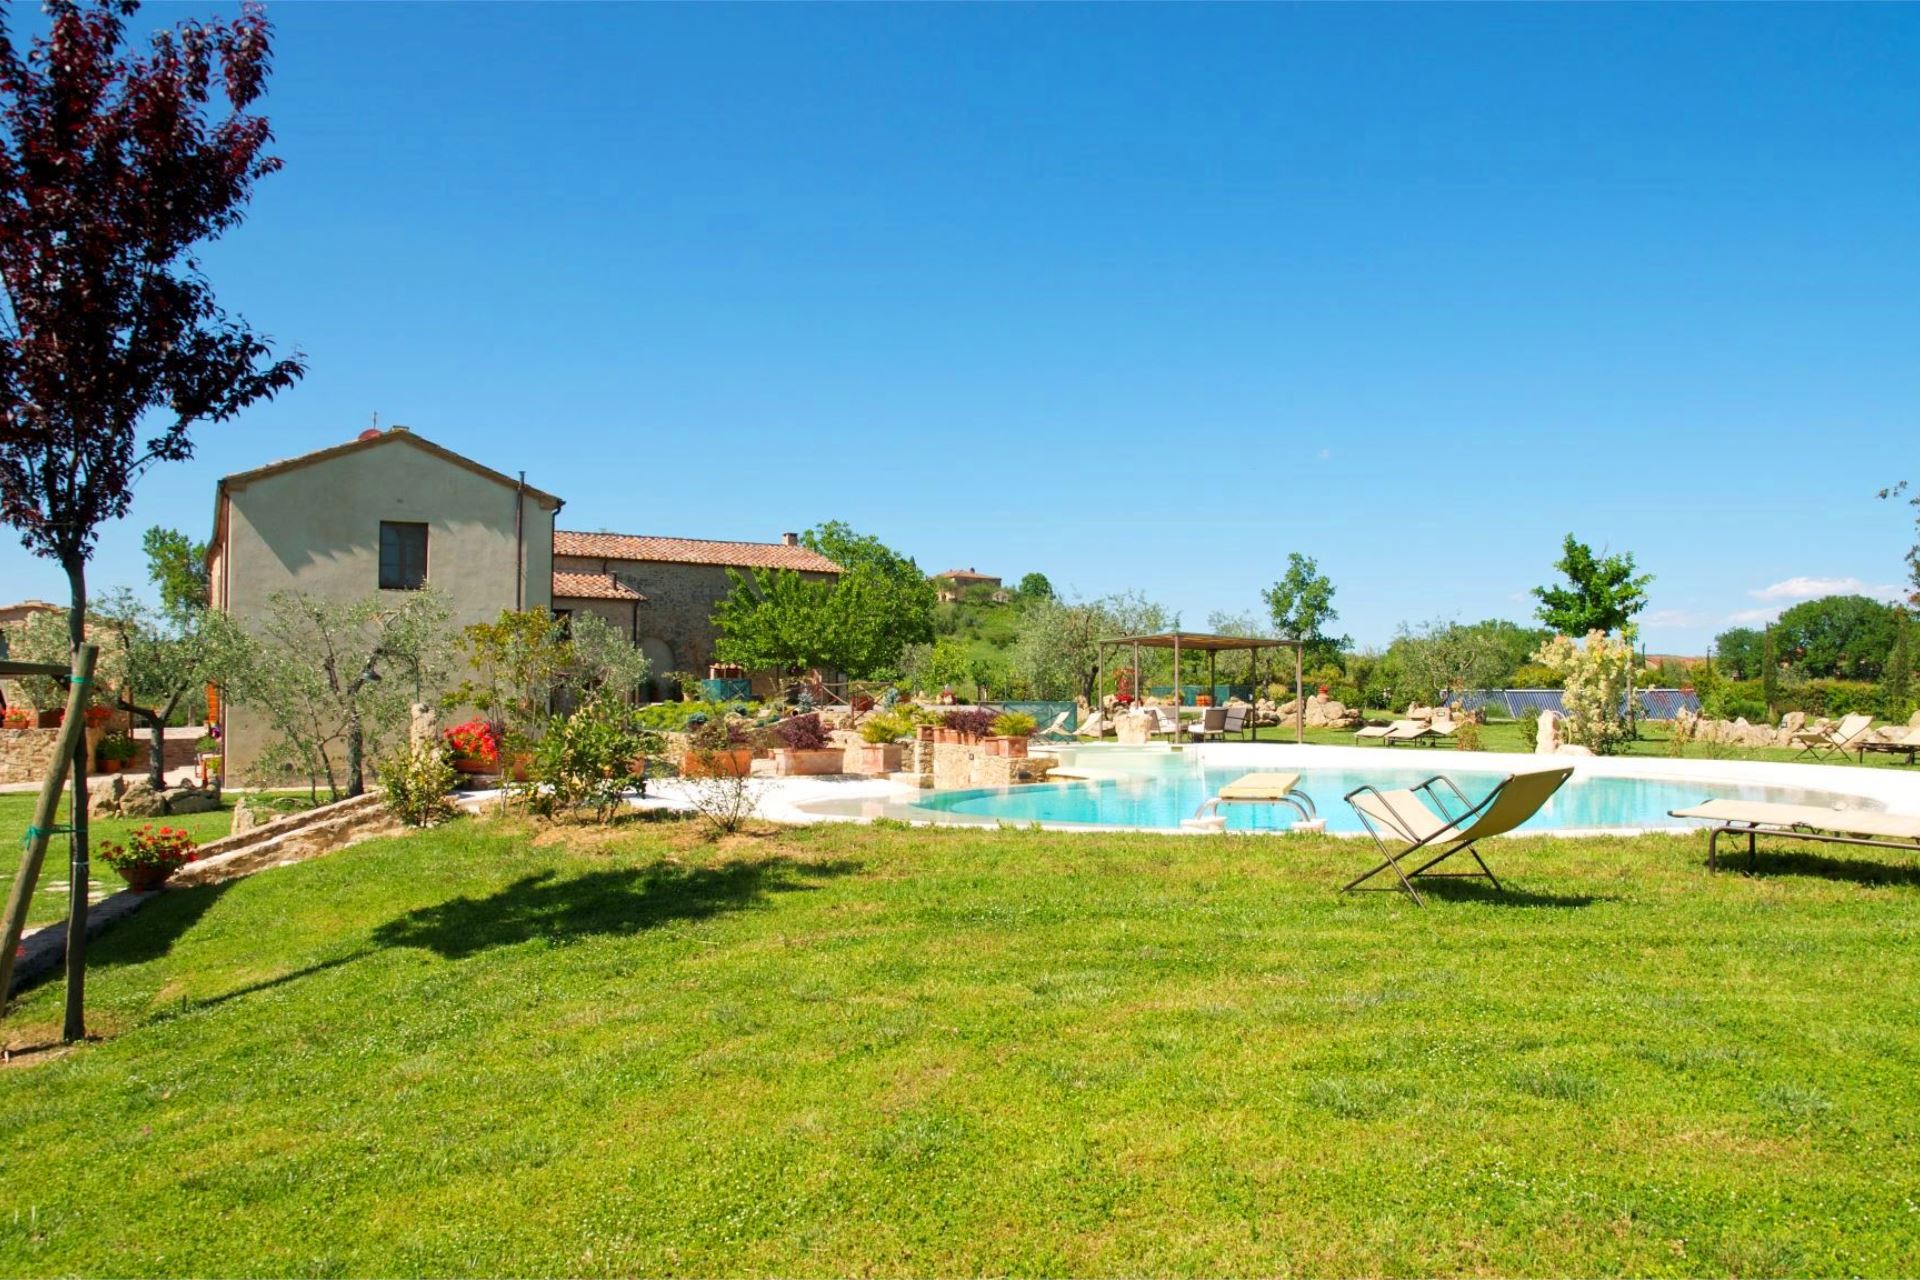 421_4f4fc5a_Agriturimso, vakantiehuis met privÃ© zwembad, Toscane, Asciano, Val D'Orcia (1)